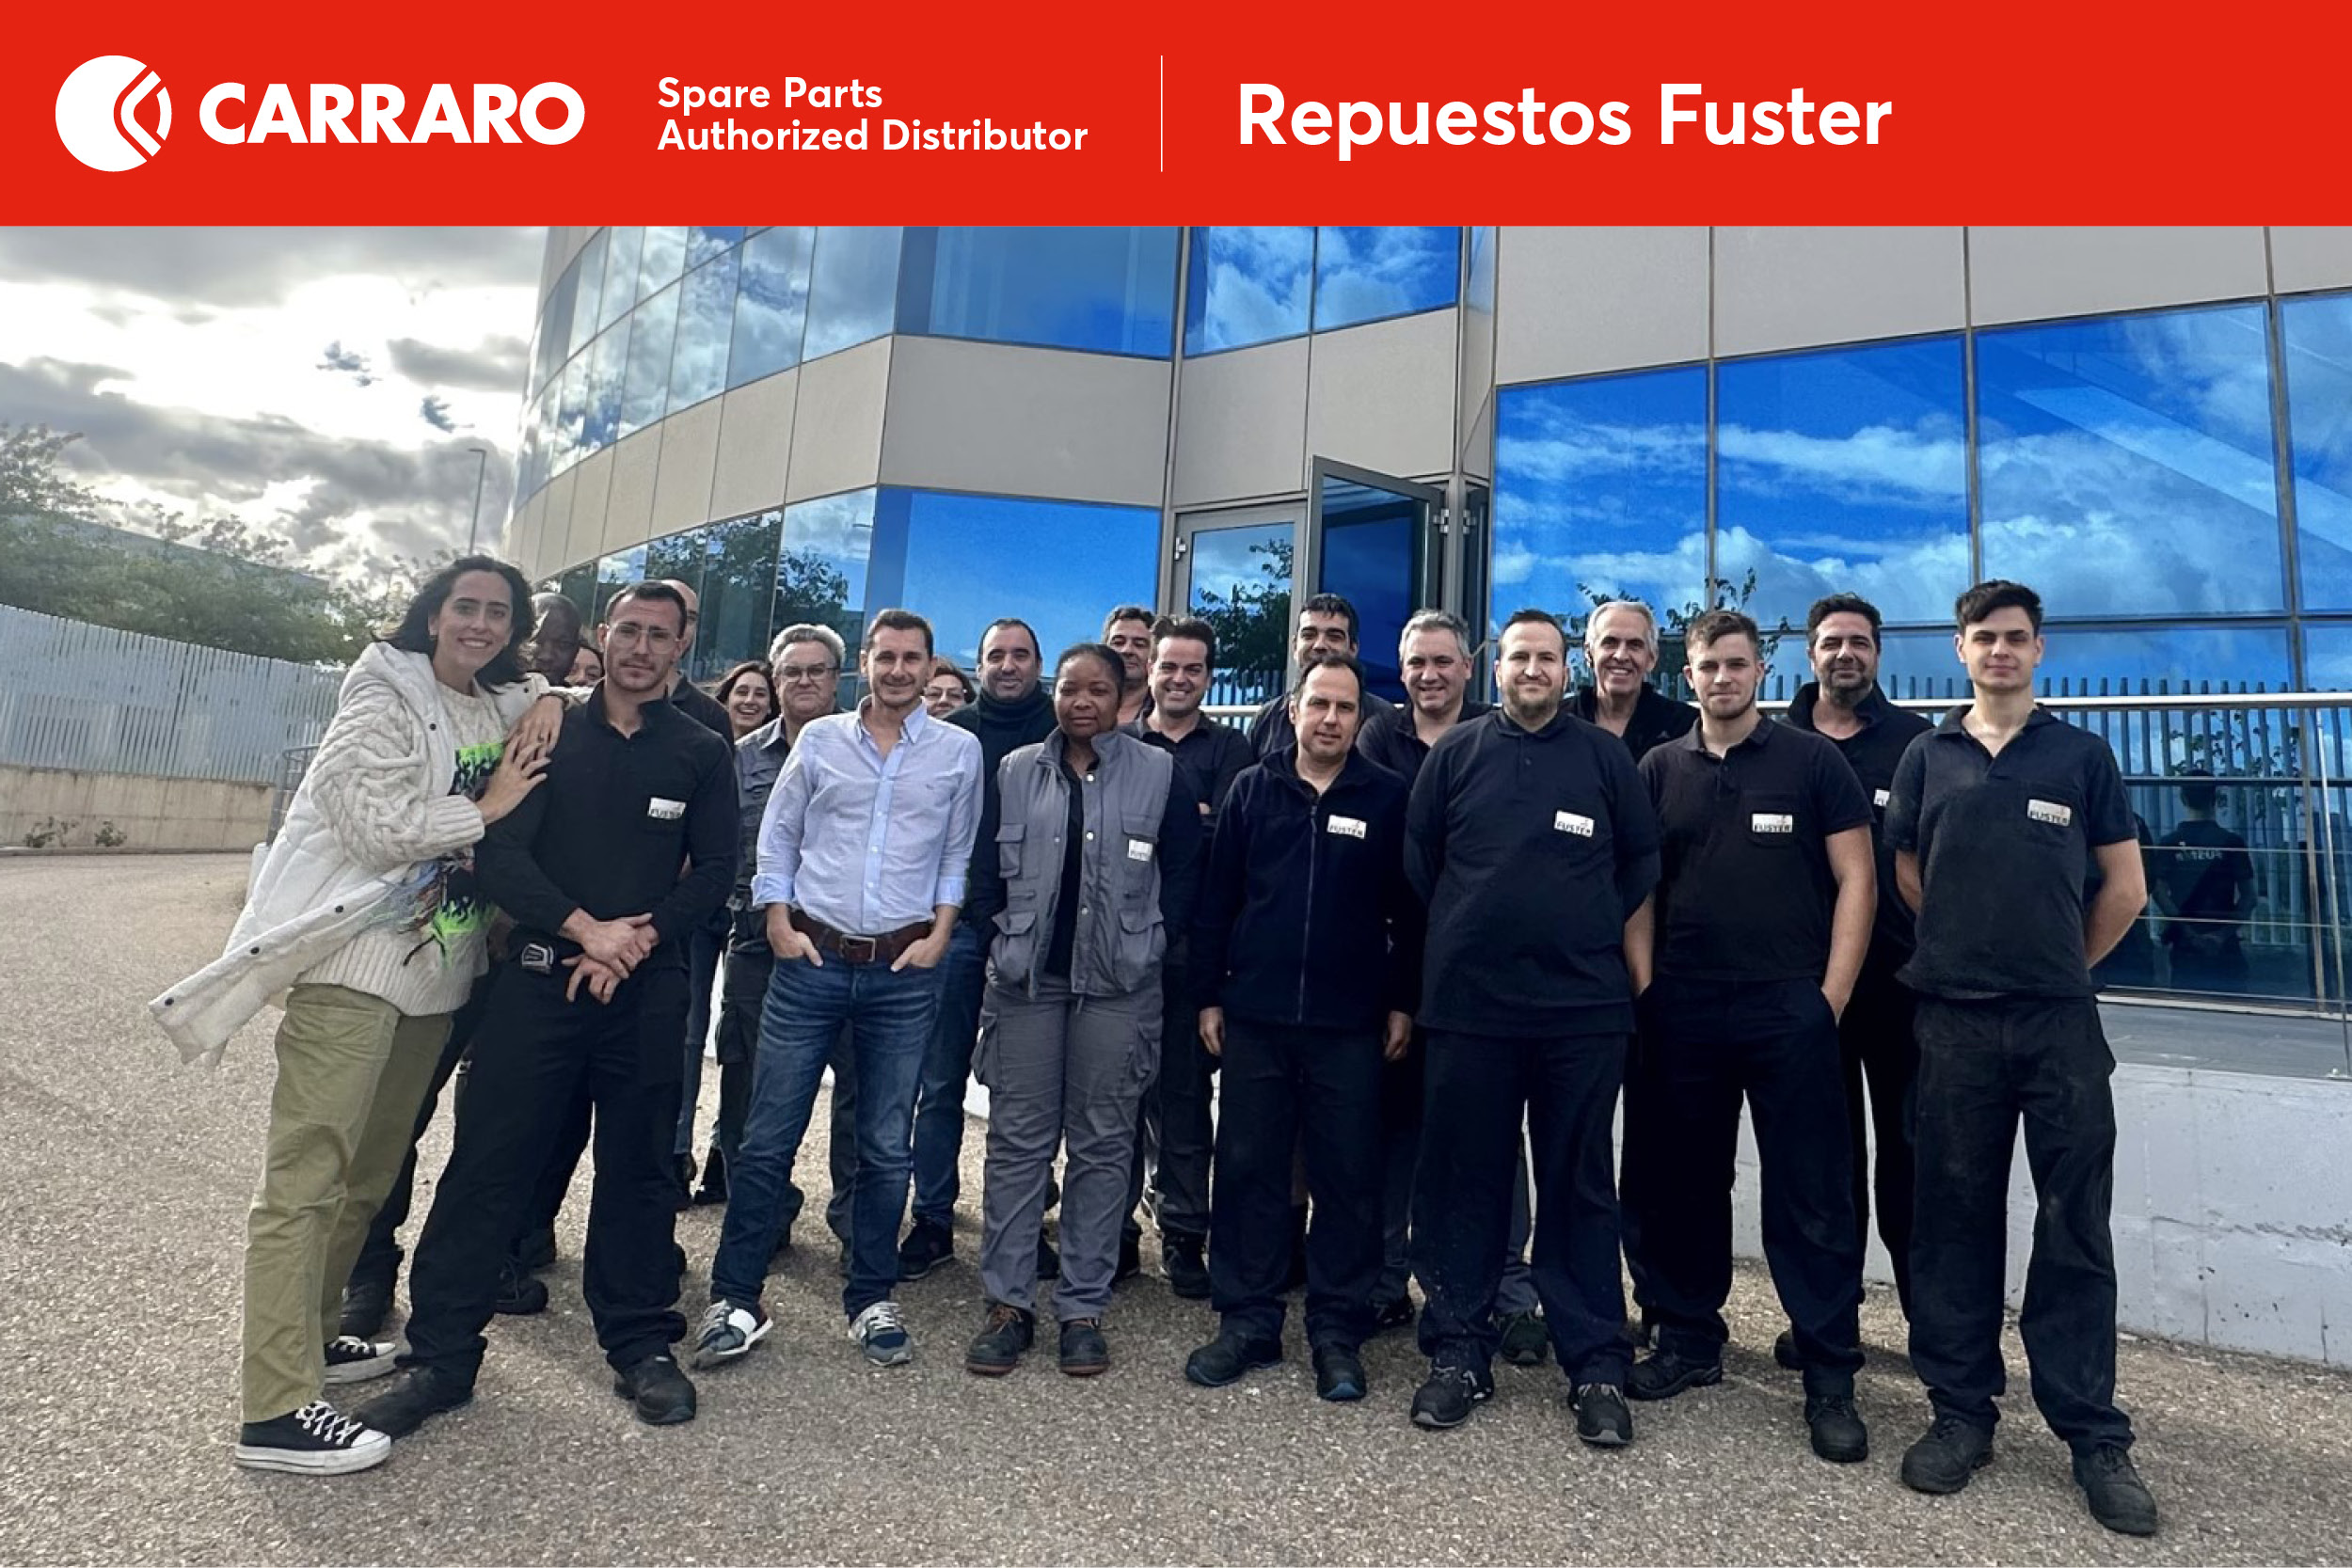 New Spare Partner in Spain: Repuestos Fuster!